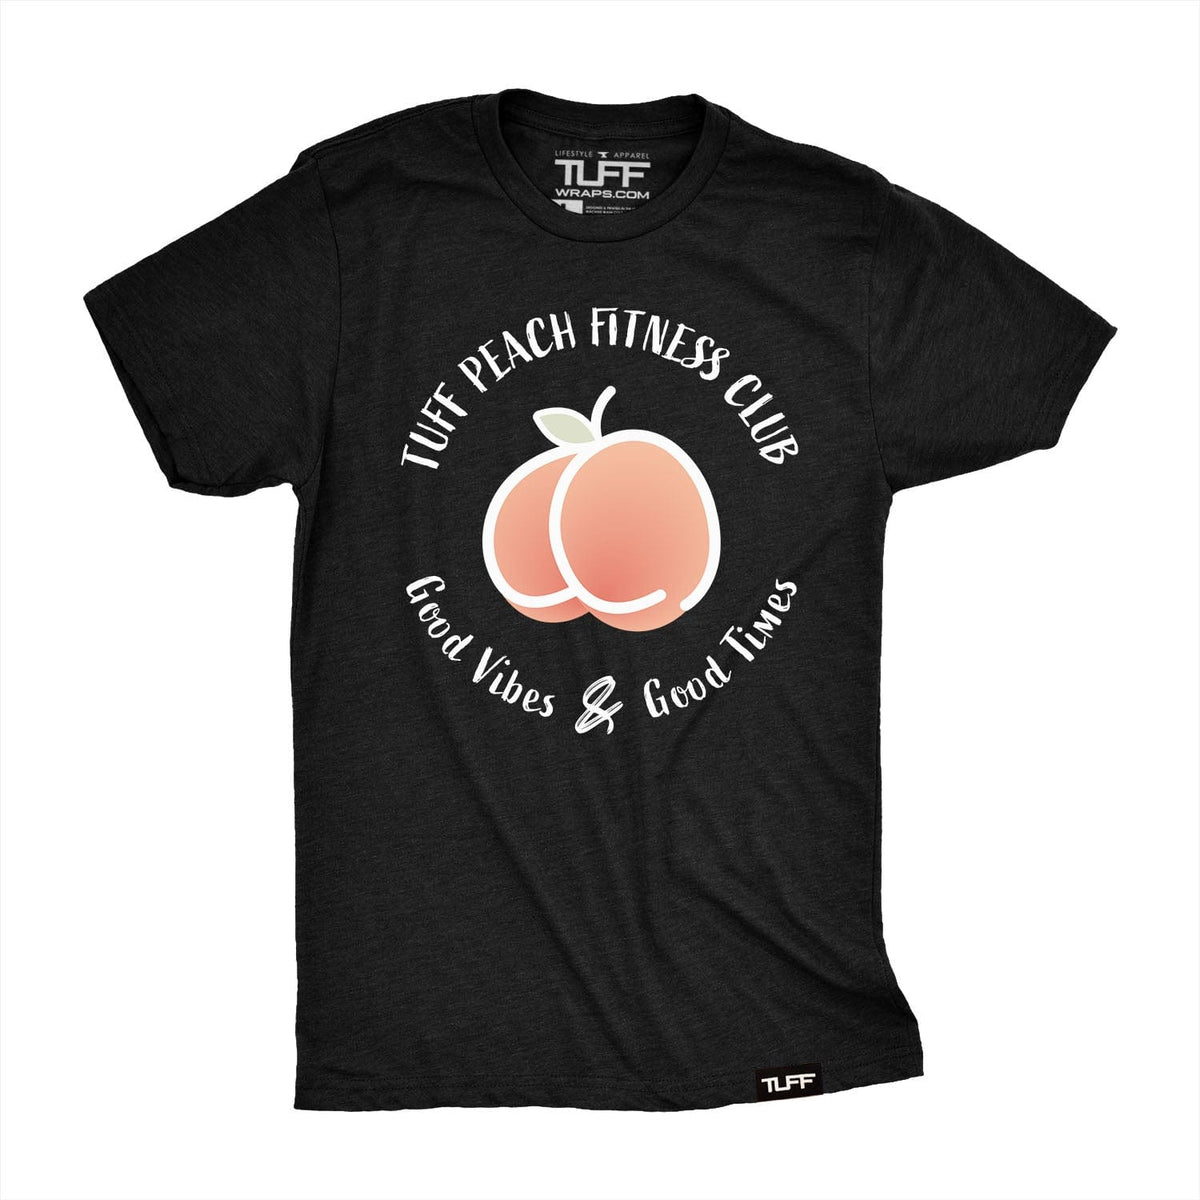 TUFF Peach Fitness Club Tee S / Black TuffWraps.com